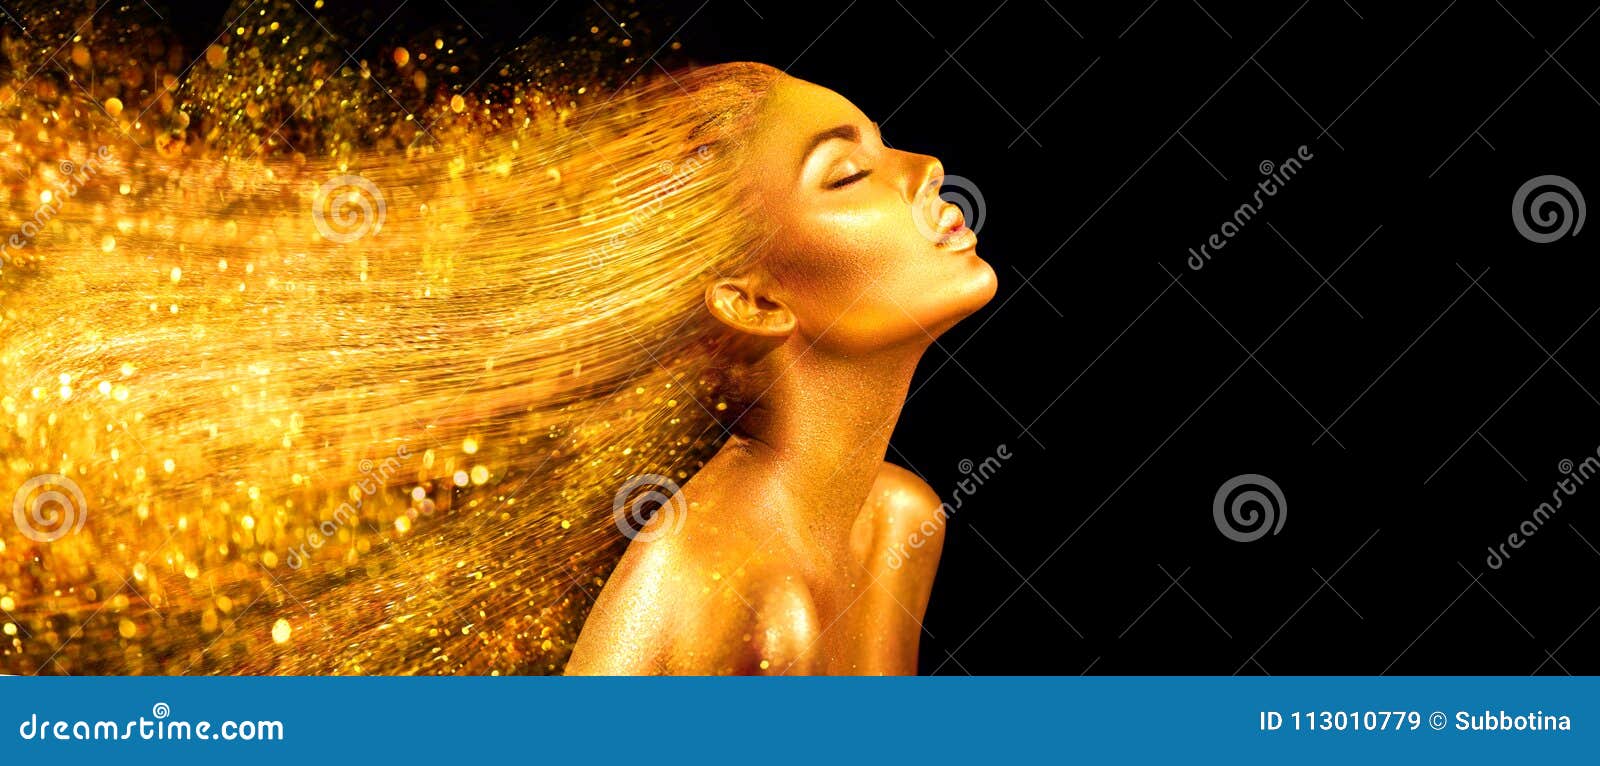 udobnost, izazov - Page 16 Fashion-model-woman-golden-bright-sparkles-girl-golden-skin-hair-portrait-closeup-fashion-model-woman-golden-bright-113010779